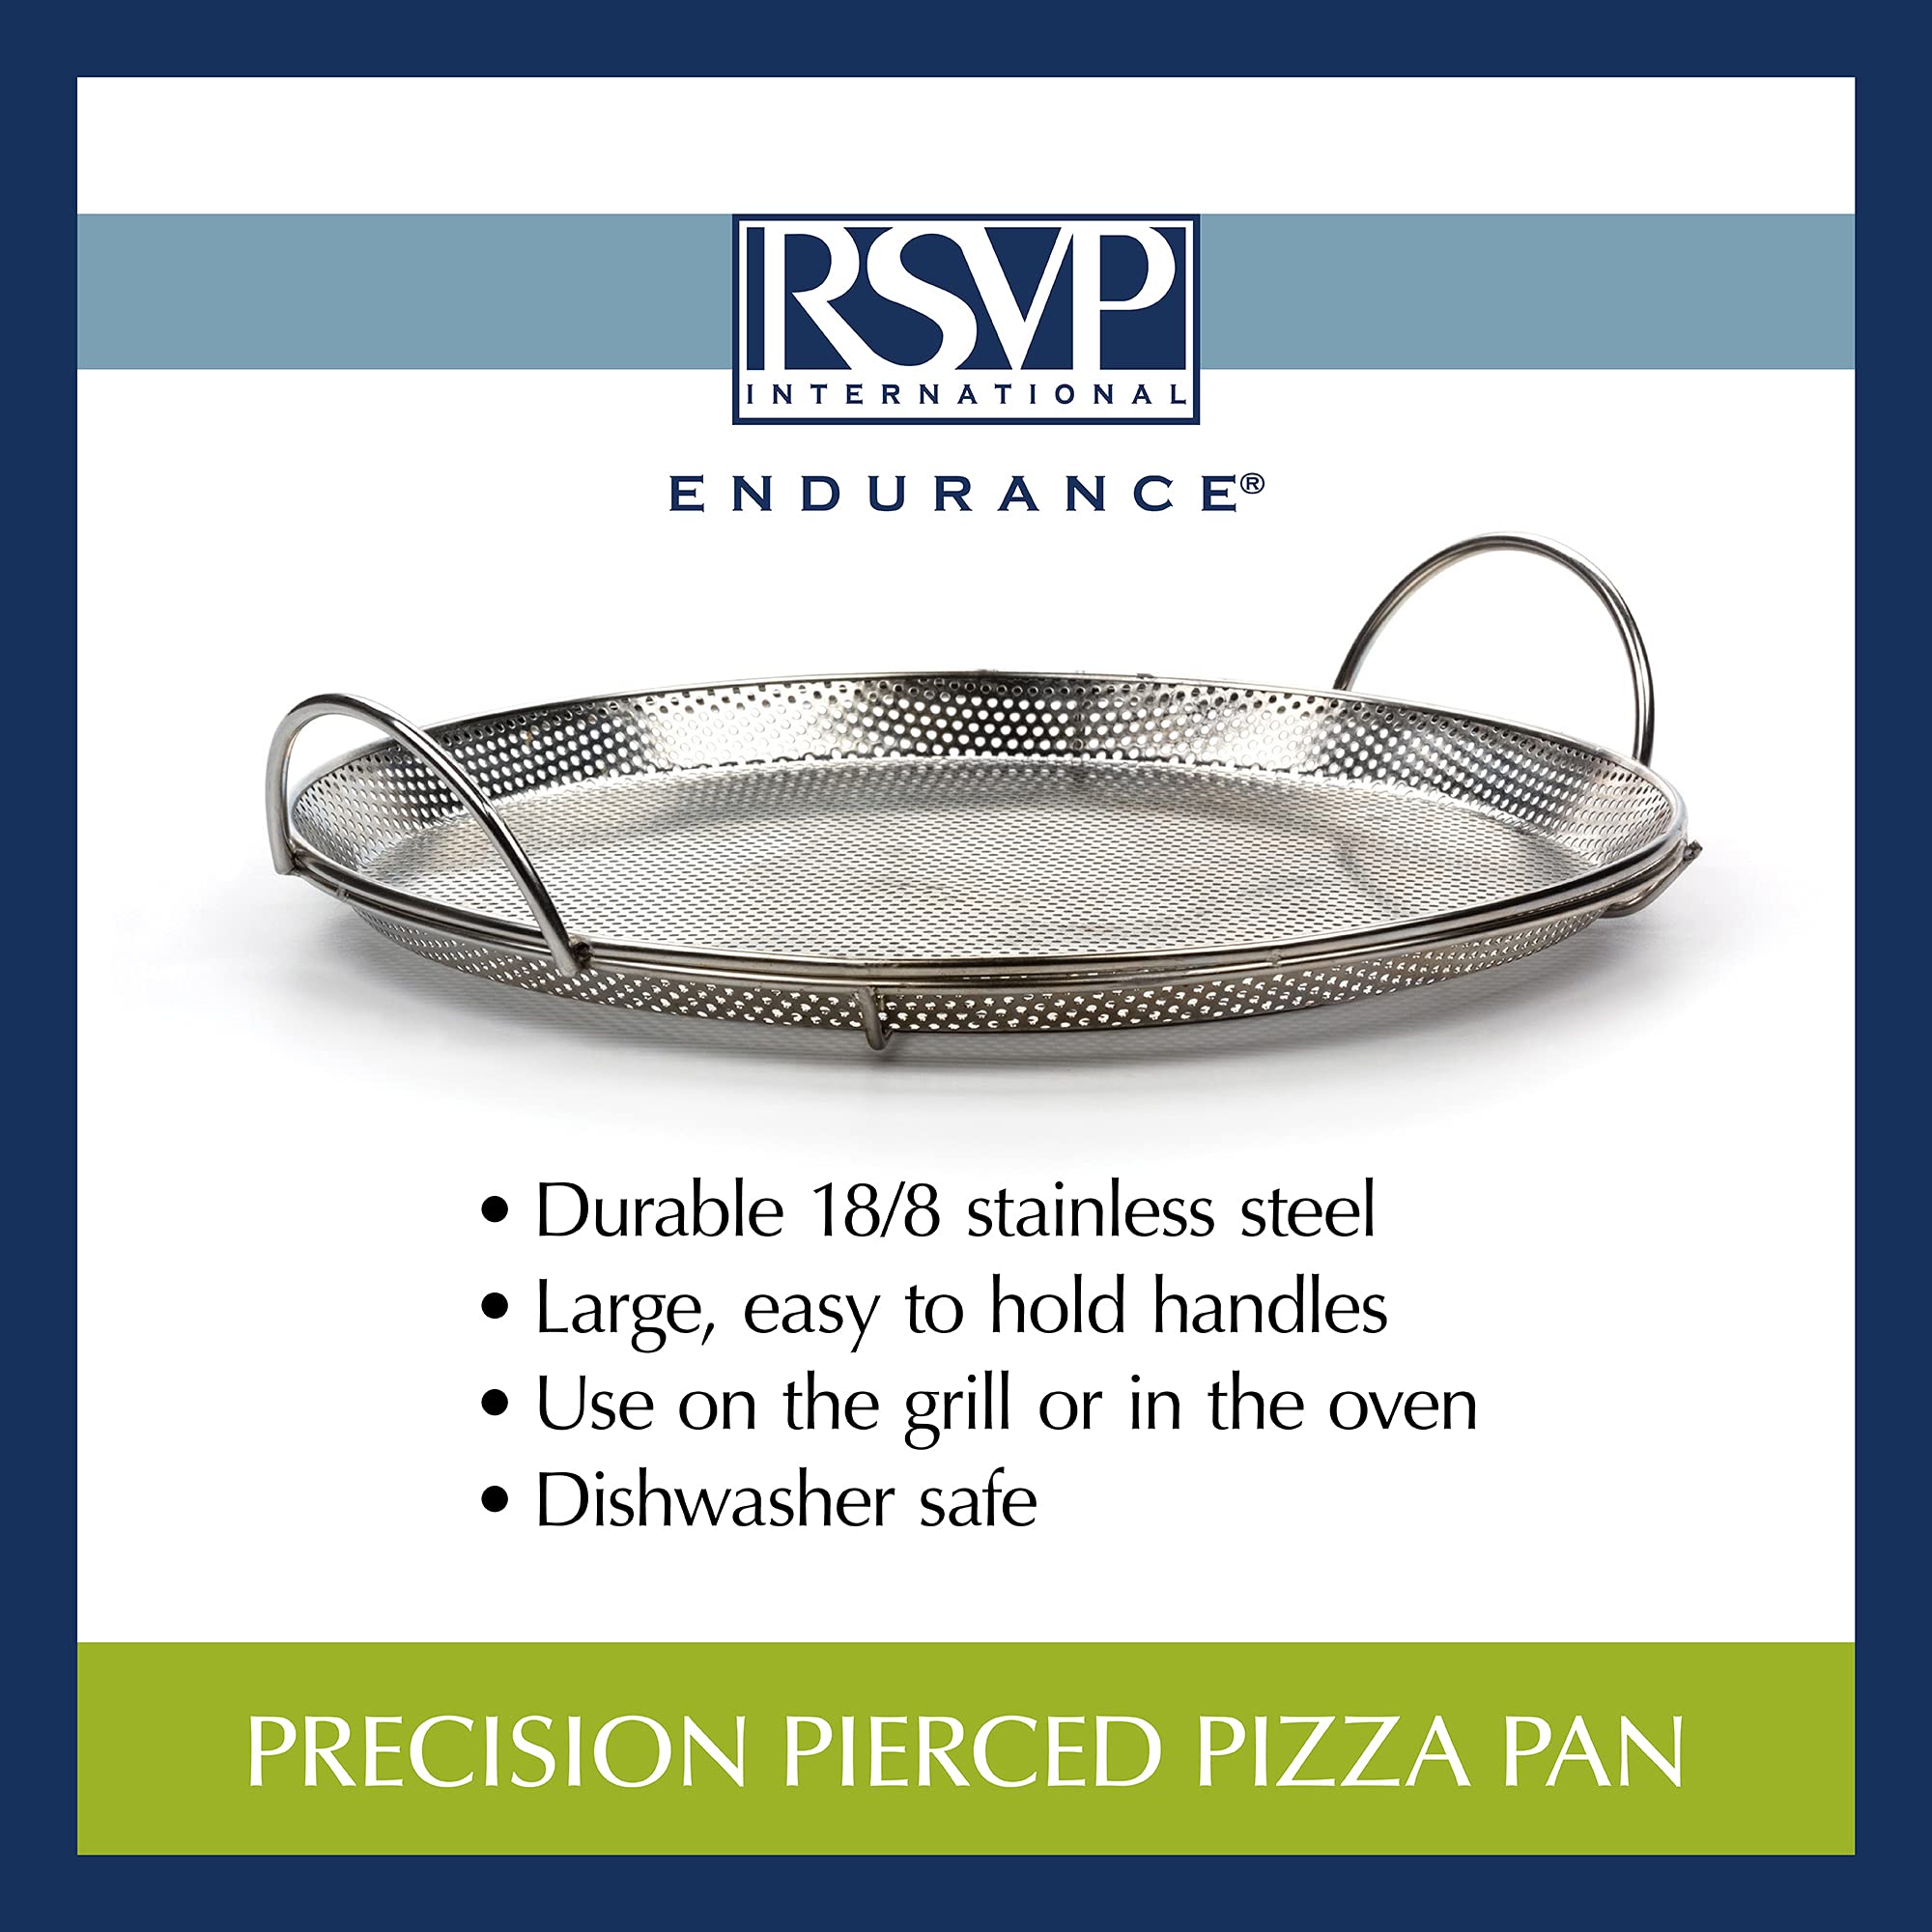 RSVP International Endurance® Stainless Steel Precision Pierced Pizza Pan, 11.5